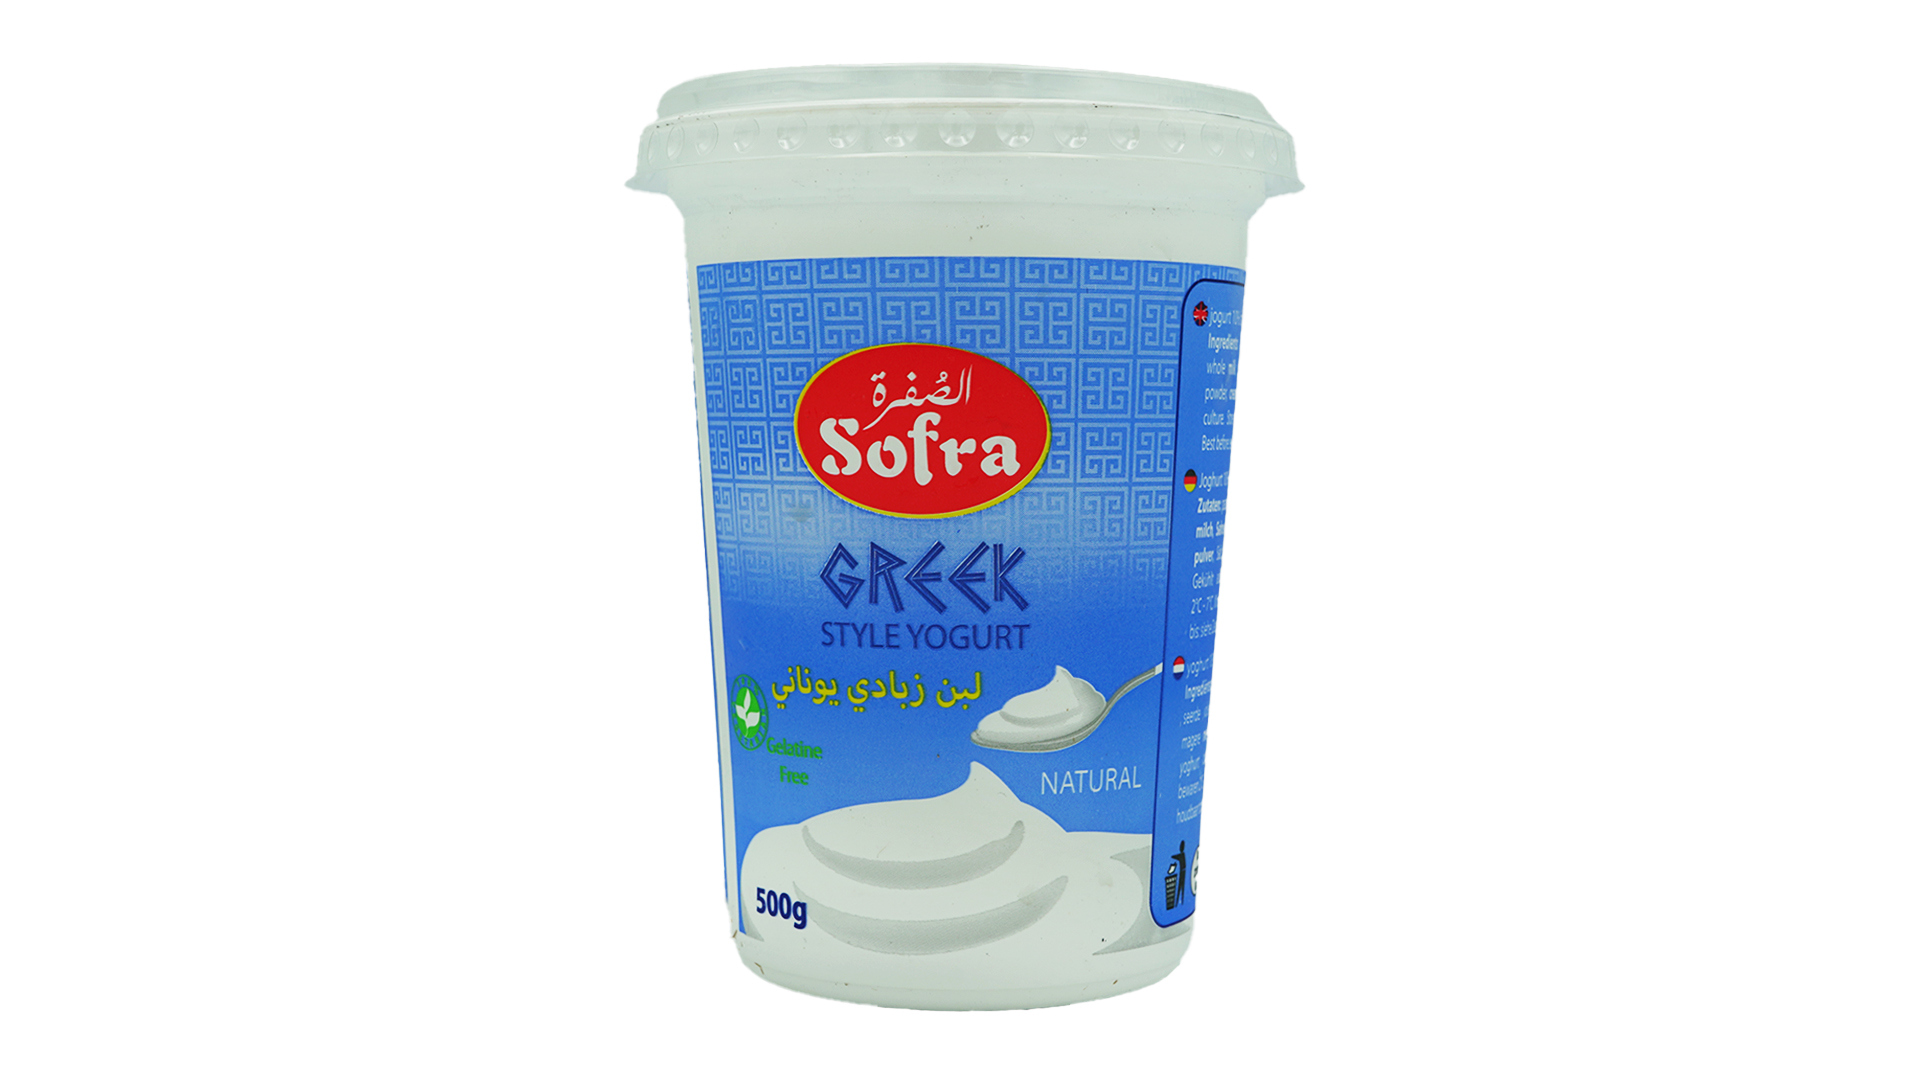 Sofra greek style yogurt 500g 2